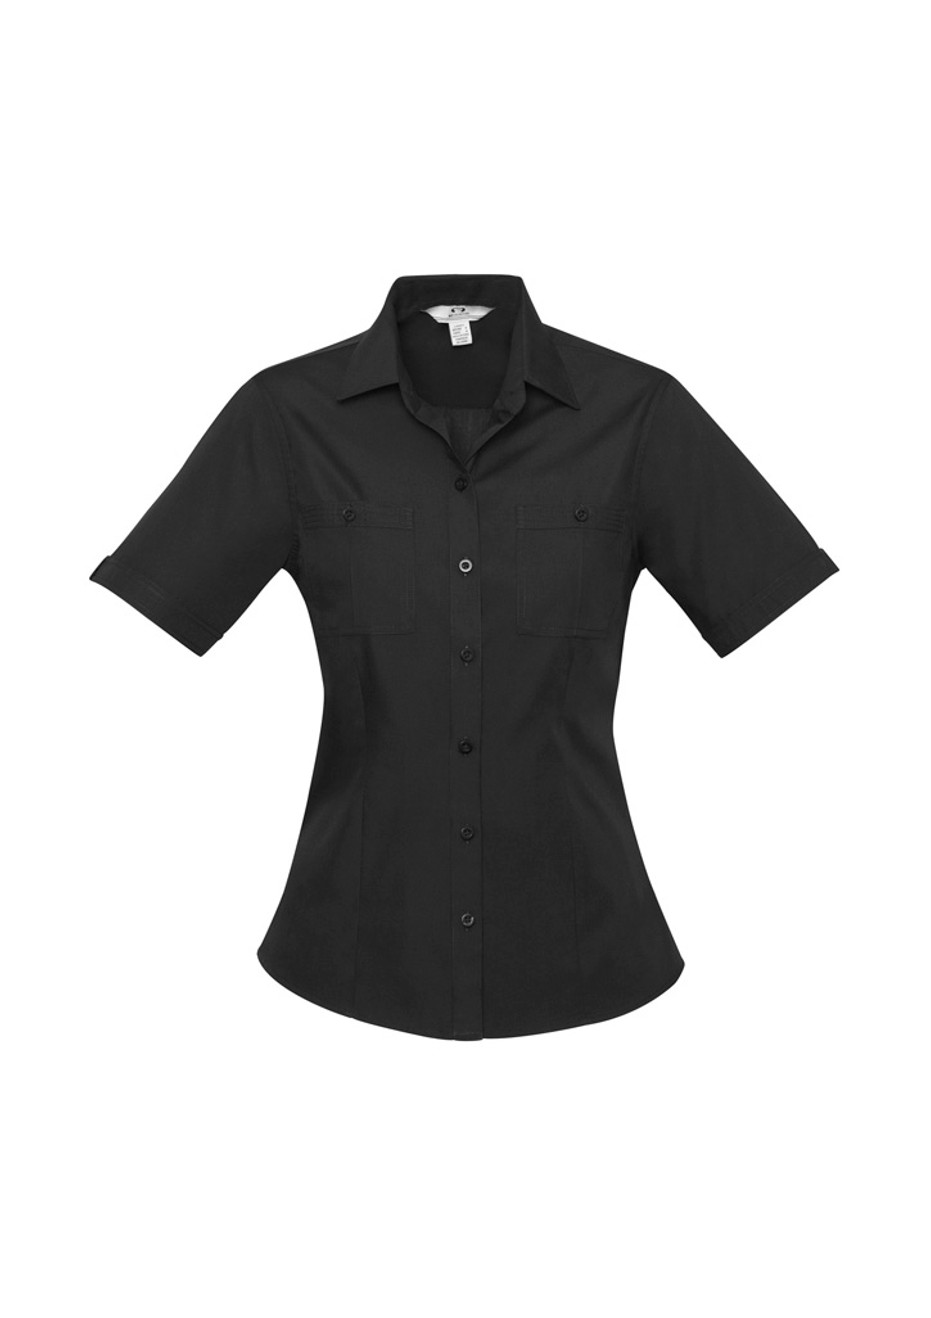 Biz Collection S306LS Ladies Bondi Short Sleeve Shirt | Available Colours: Black, Charcoal, Navy, Sand